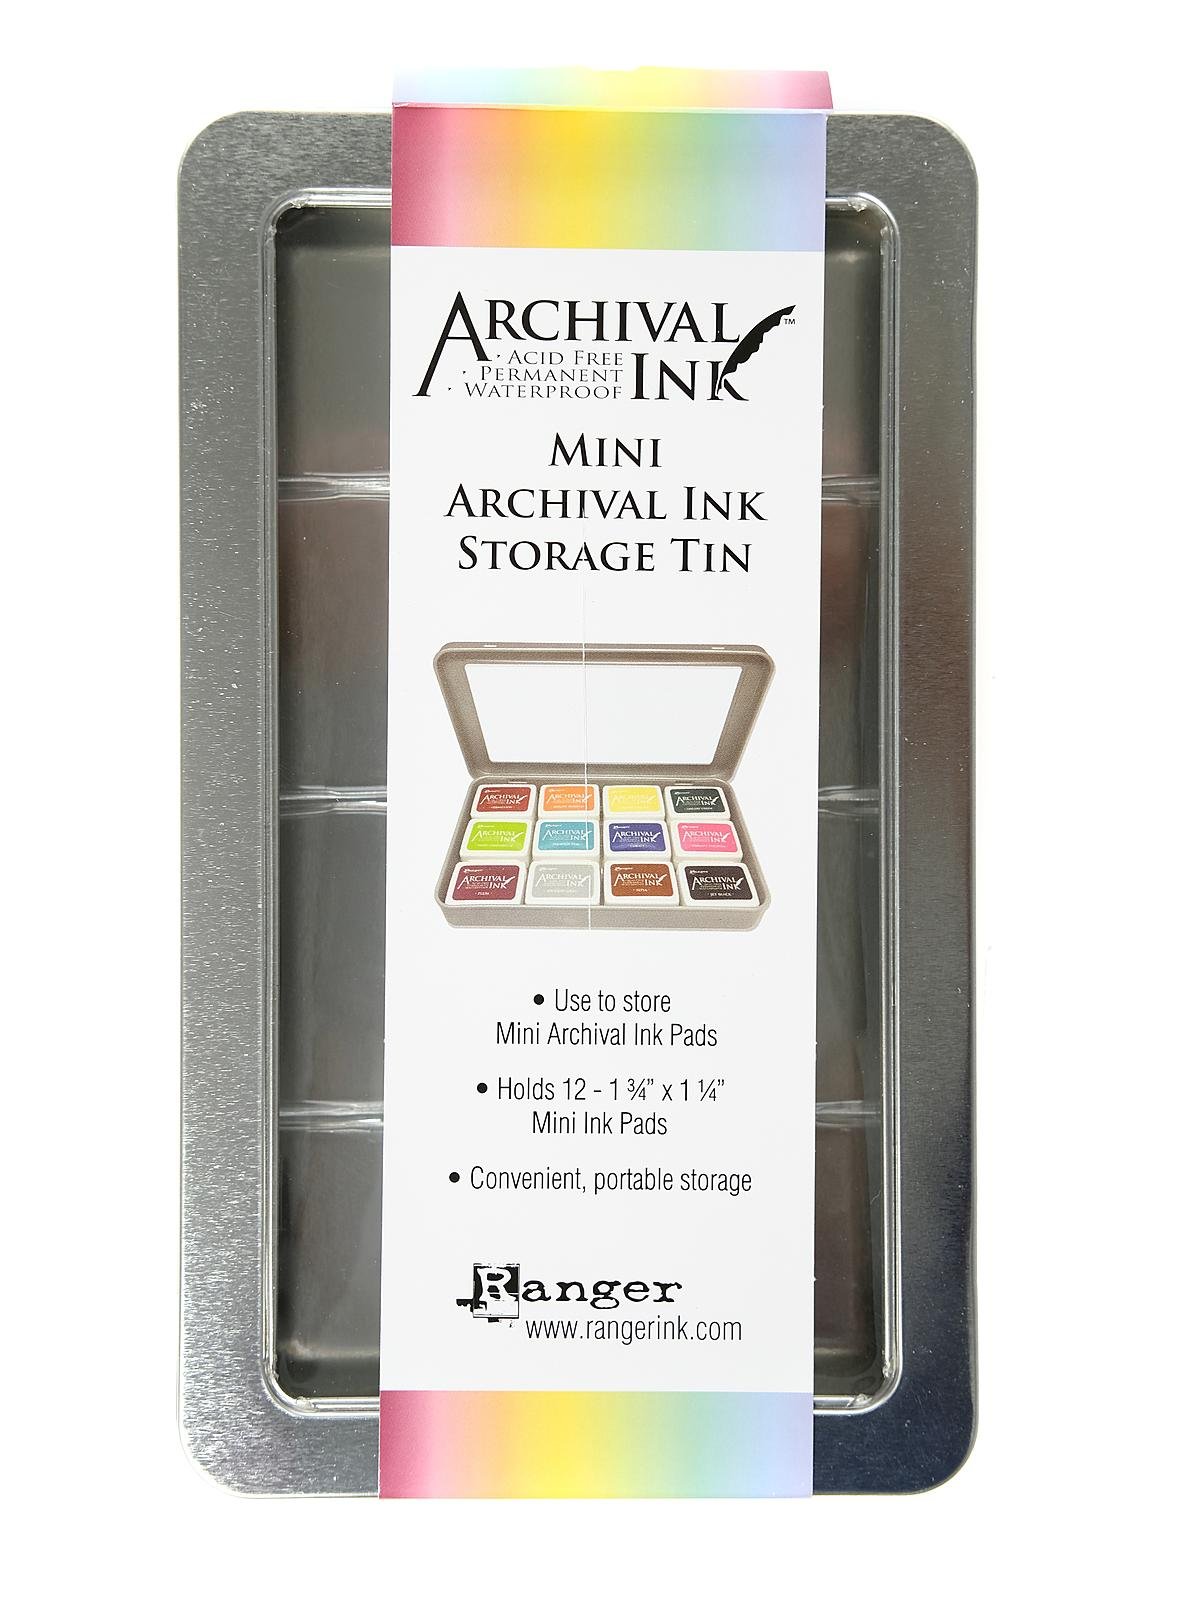 Ranger - Mini Archival Ink Storage Tin